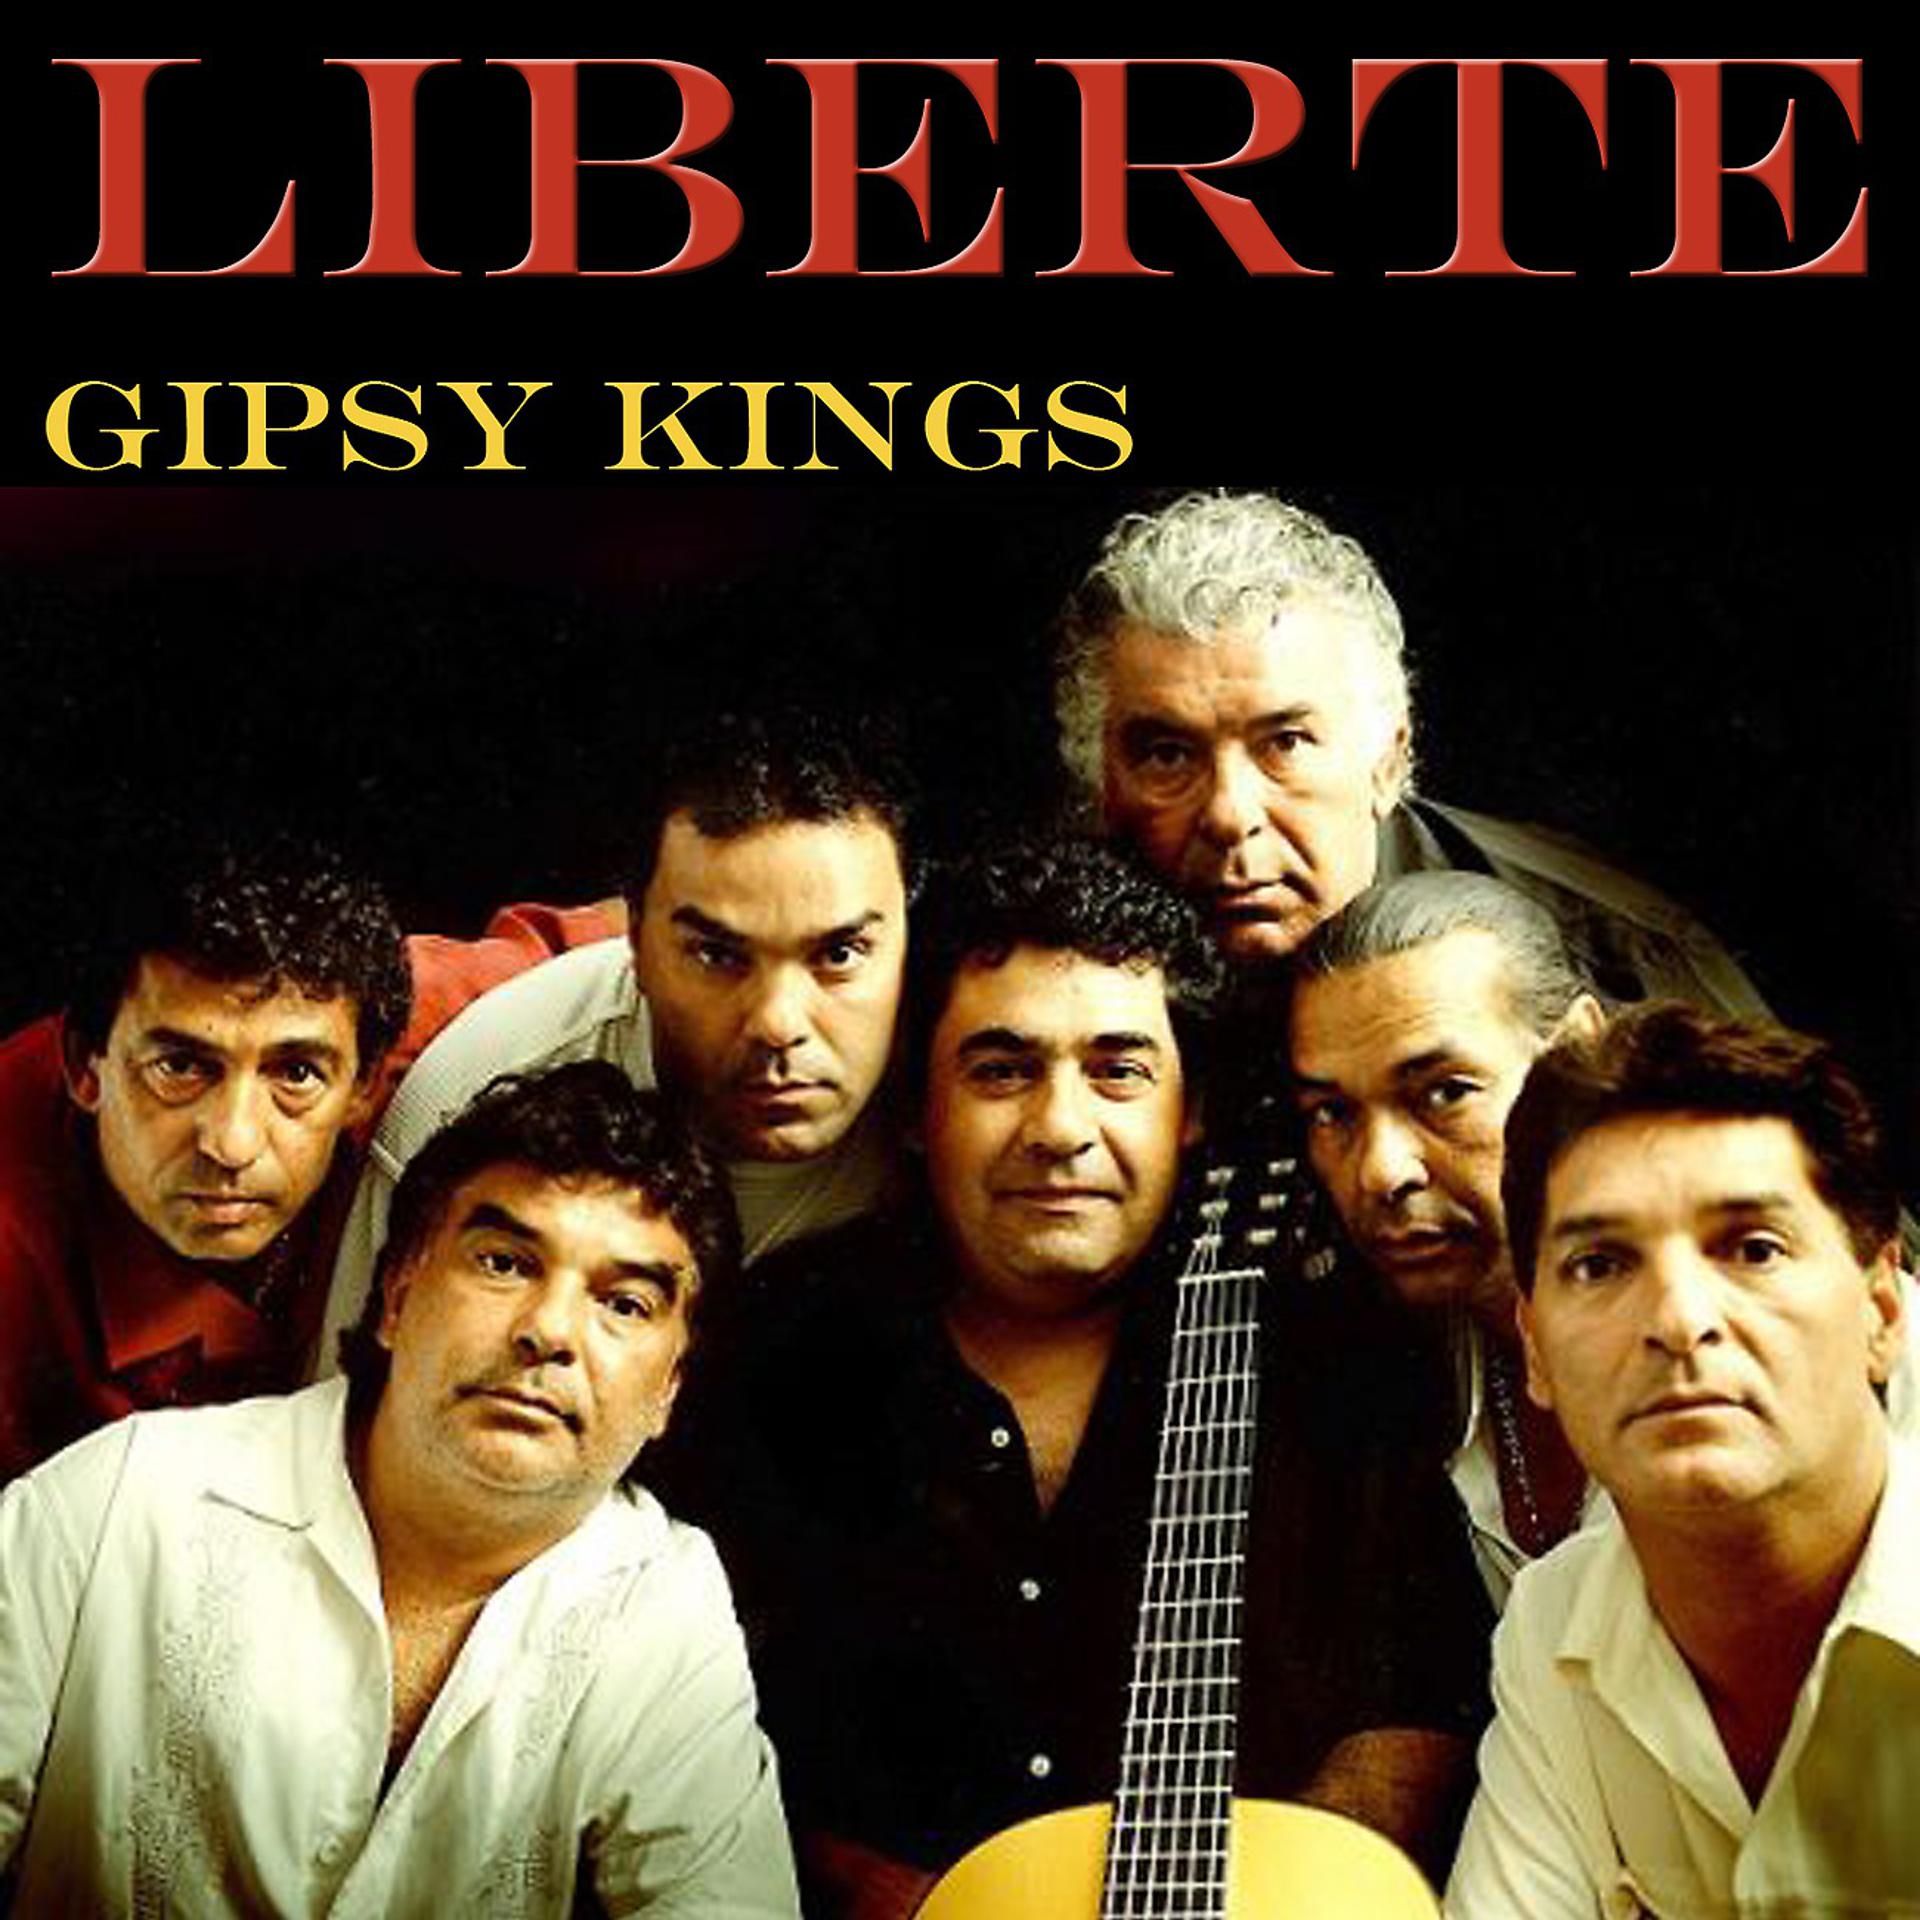 Gipsy kings песни. Группа Gipsy Kings. Группа Джипси Кингс. Gipsy Kings "Gipsy Kings". Gipsy Kings 1988 Bamboleo.